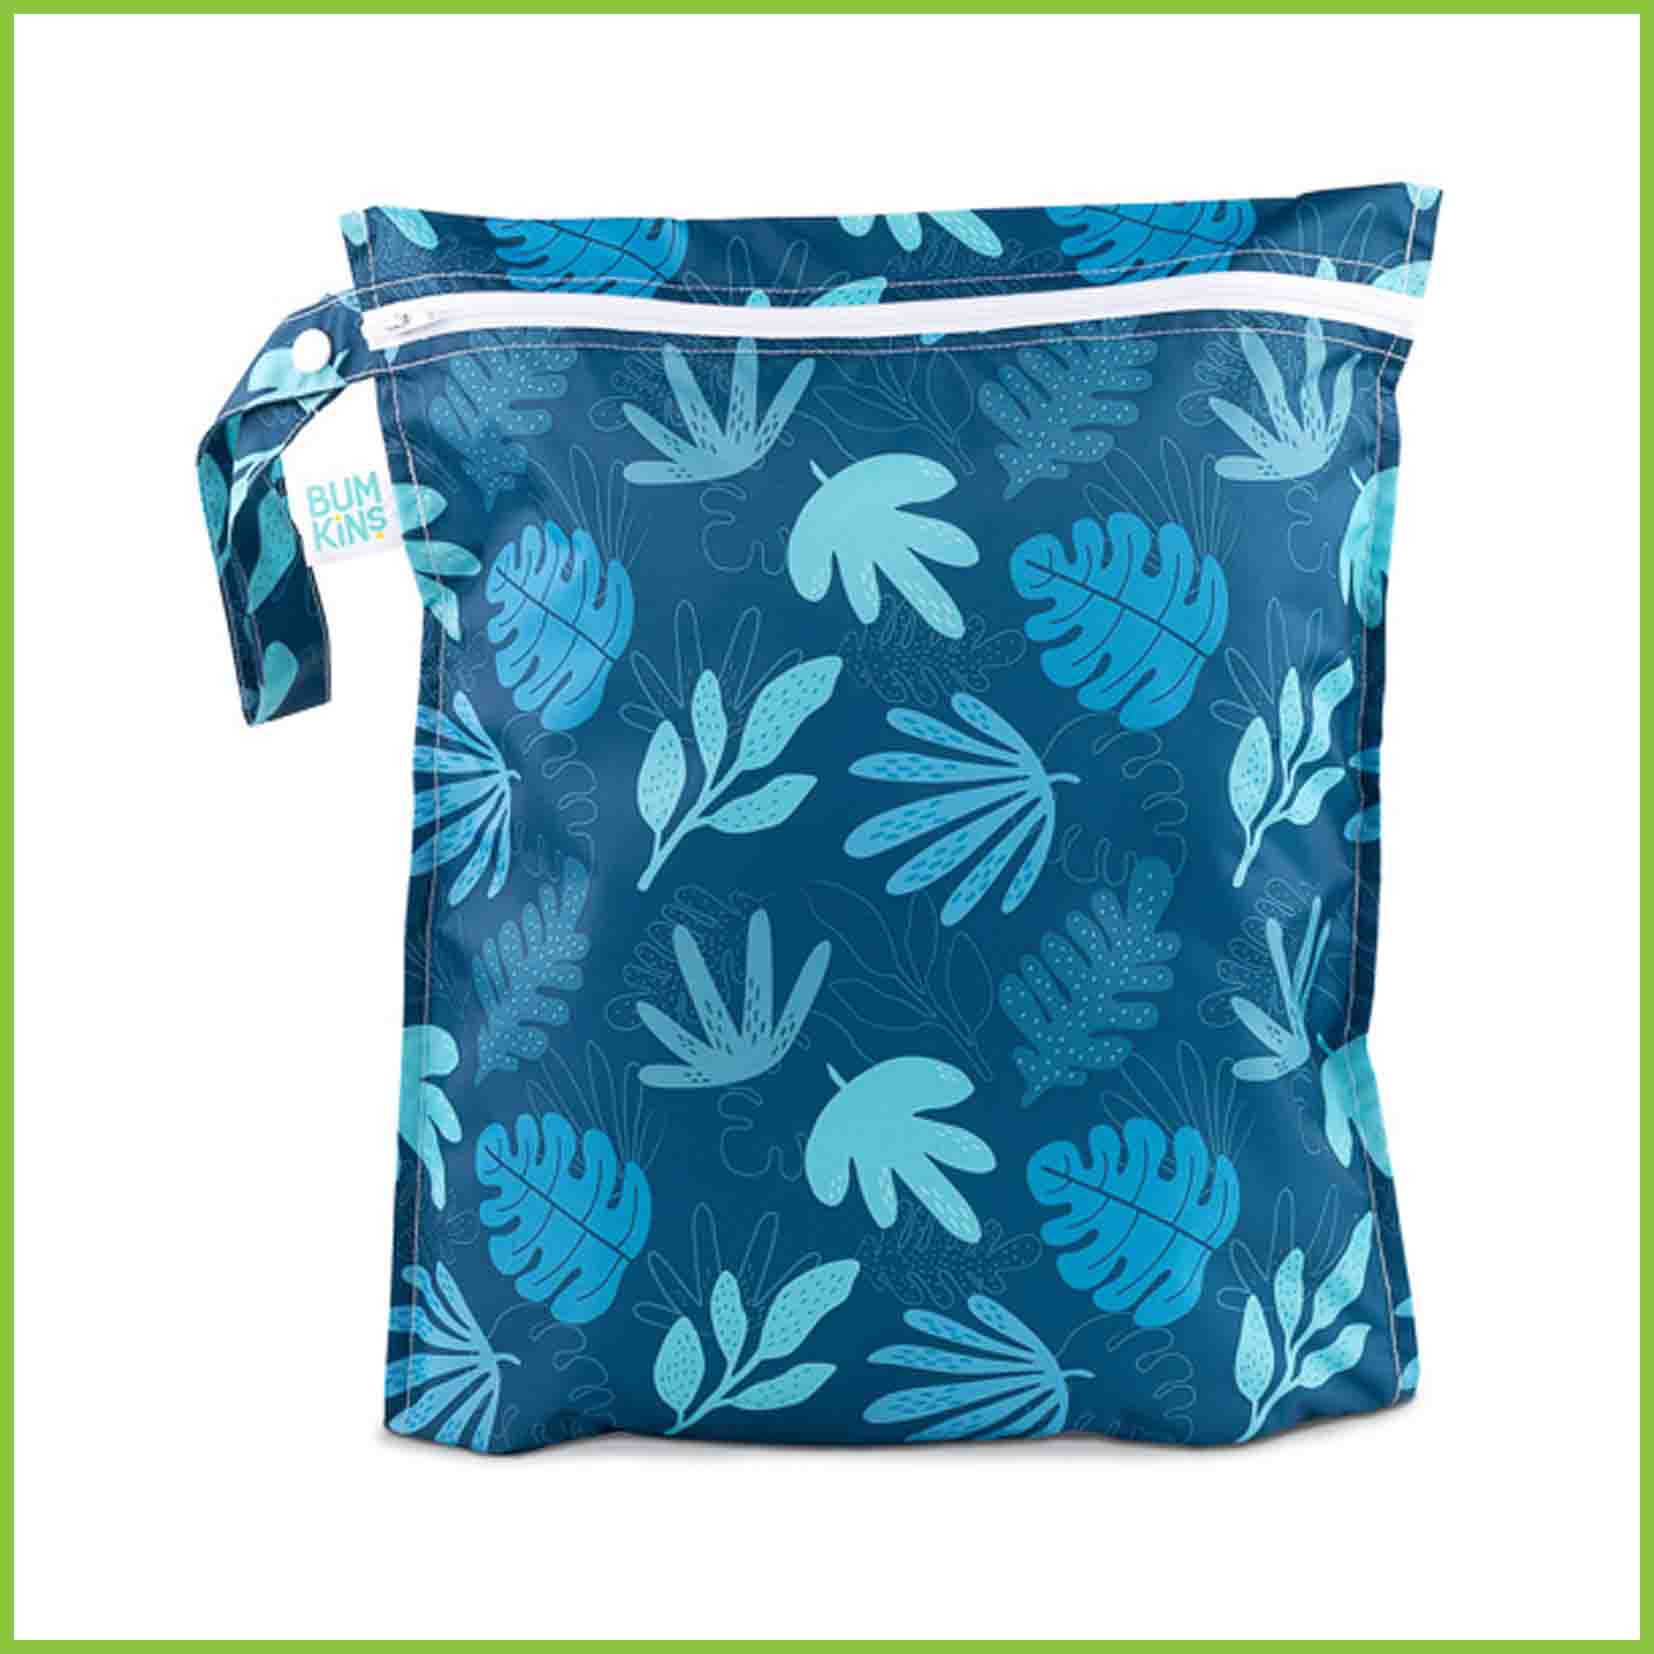 A Bumkins wet bag with a Blue Tropic print.